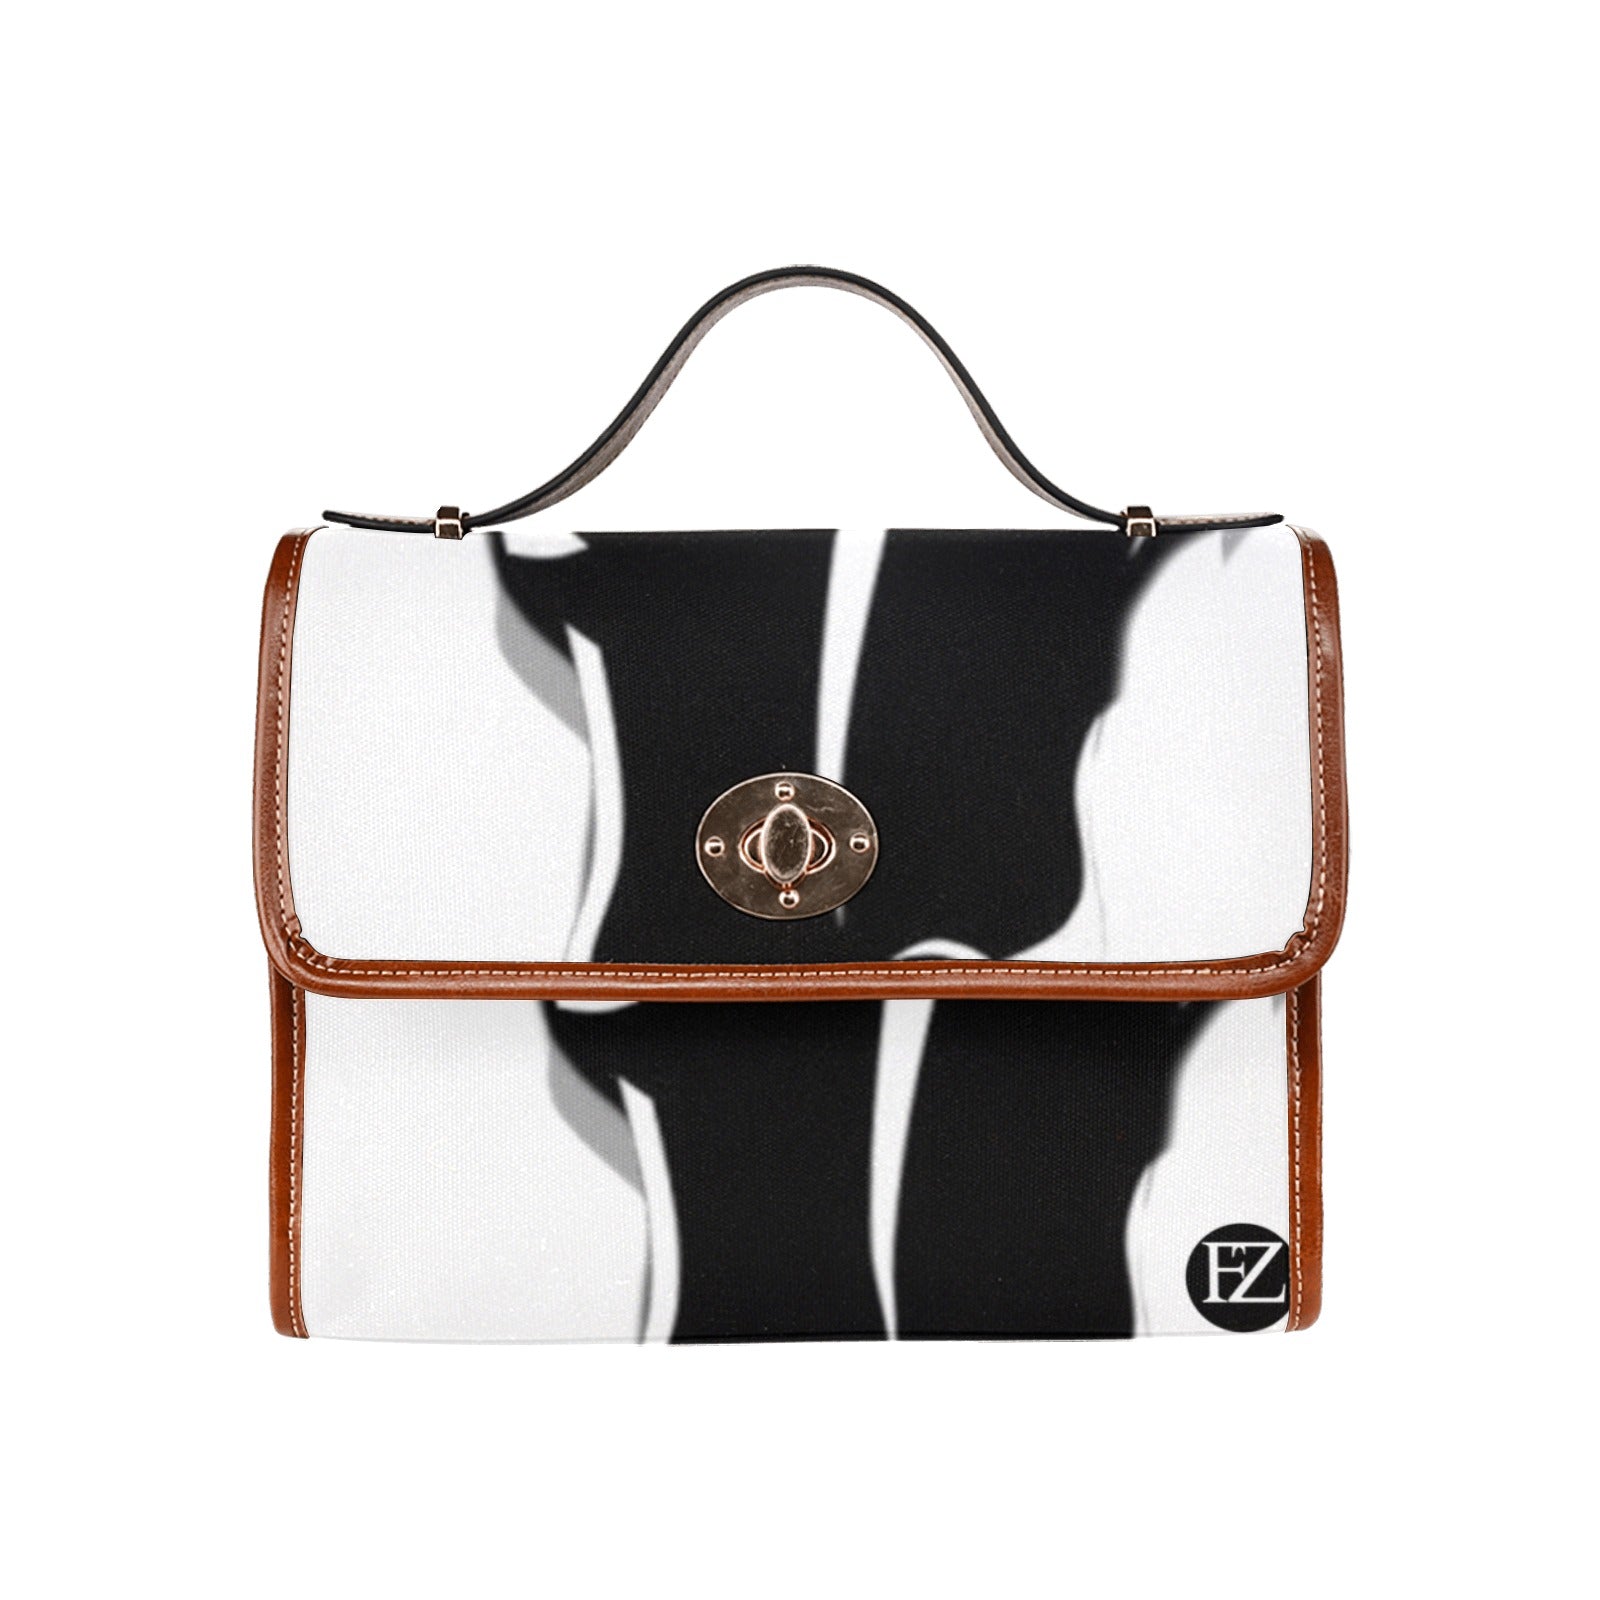 fz bull handbag one size / fz bull handbag - white all over print waterproof canvas bag(model1641)(brown strap)